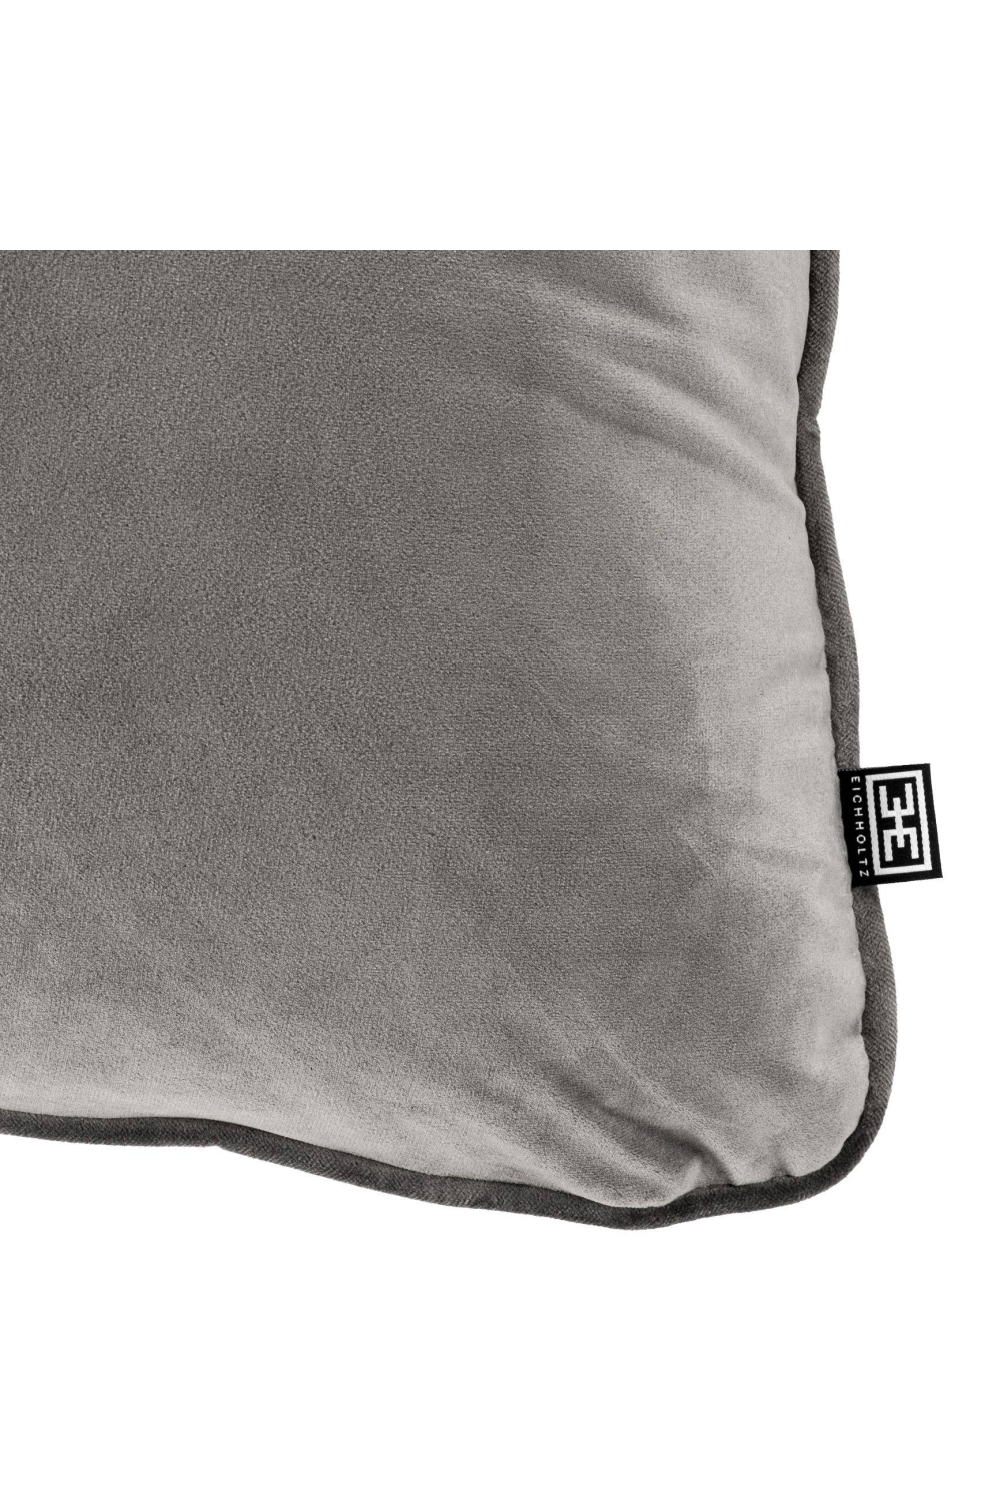 Gray Velvet Pillow | Eichholtz Roche | OROA